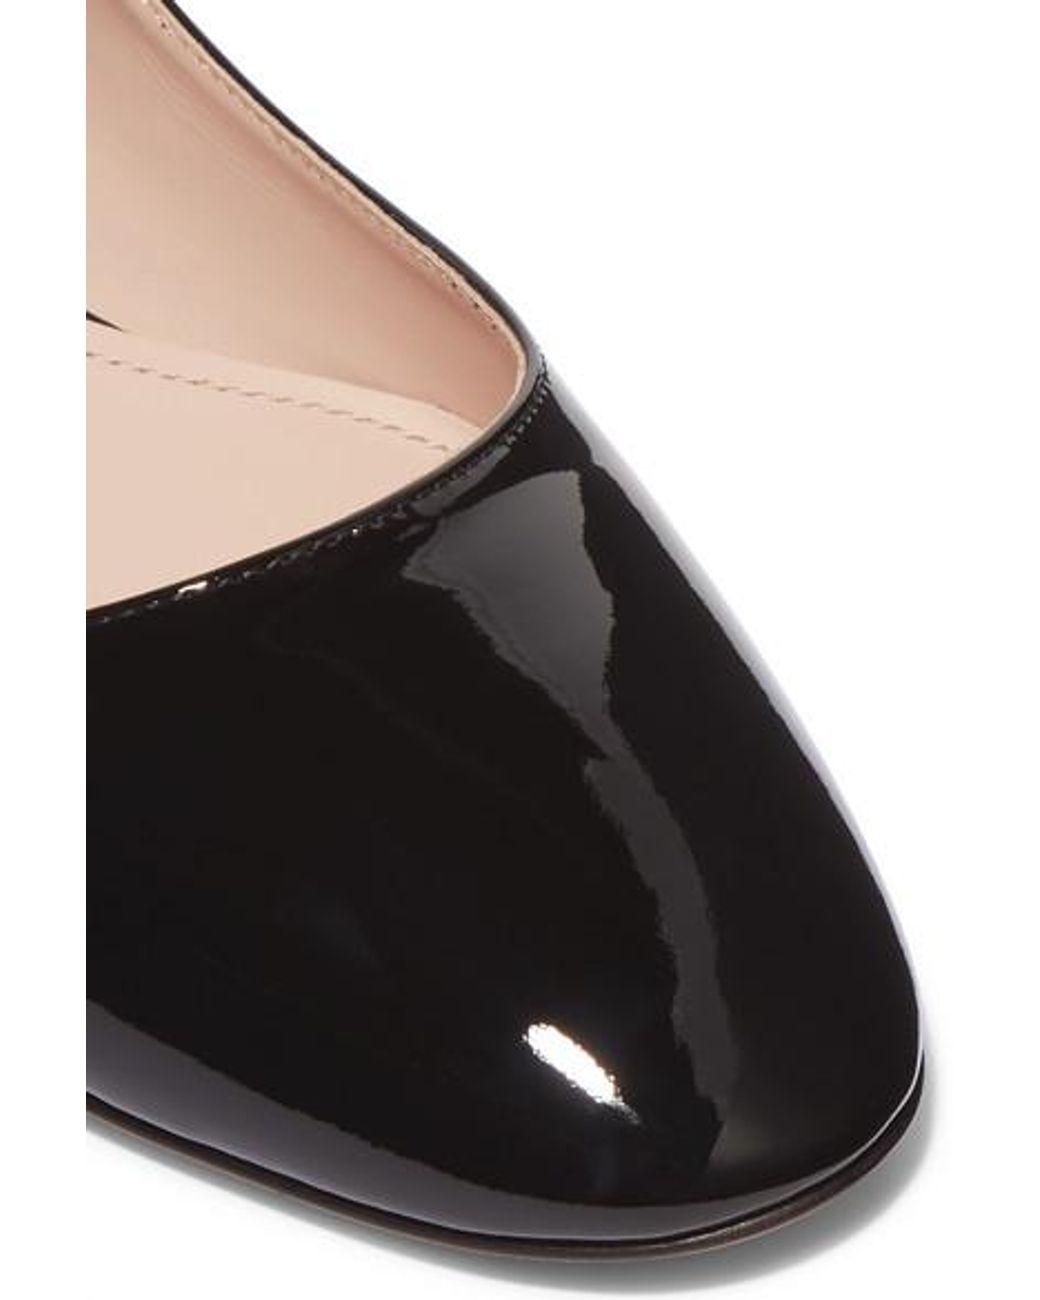 Miu Miu Black Patent Leather Bow Crystal Embellished Ballet Flats Size 40.5 Miu  Miu